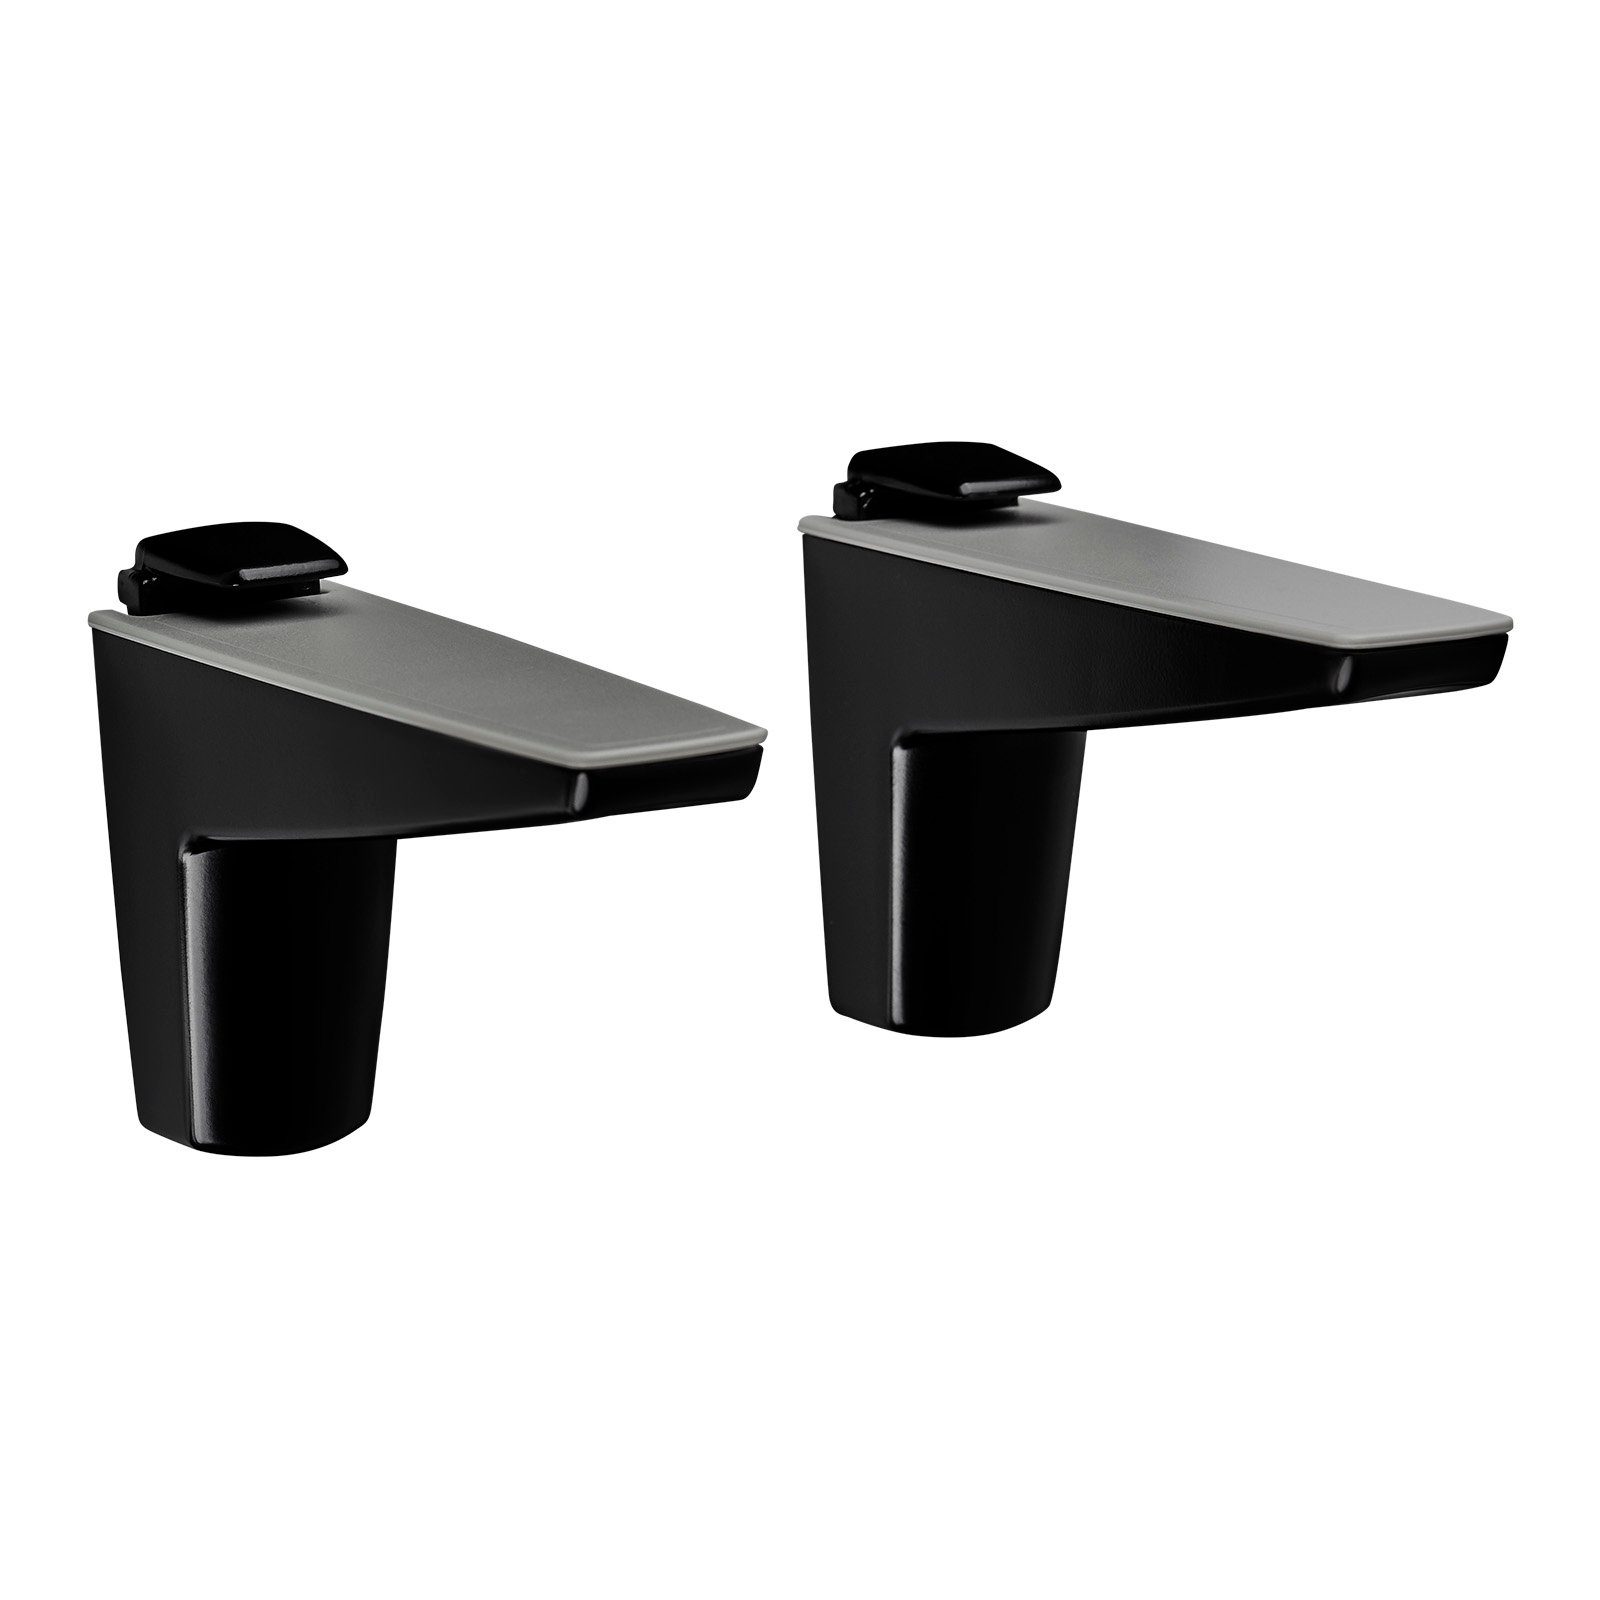 1 SO-TECH® MOON schwarz, Paar Möbelbeschlag S, Glasbodenträger Regalbodenträger